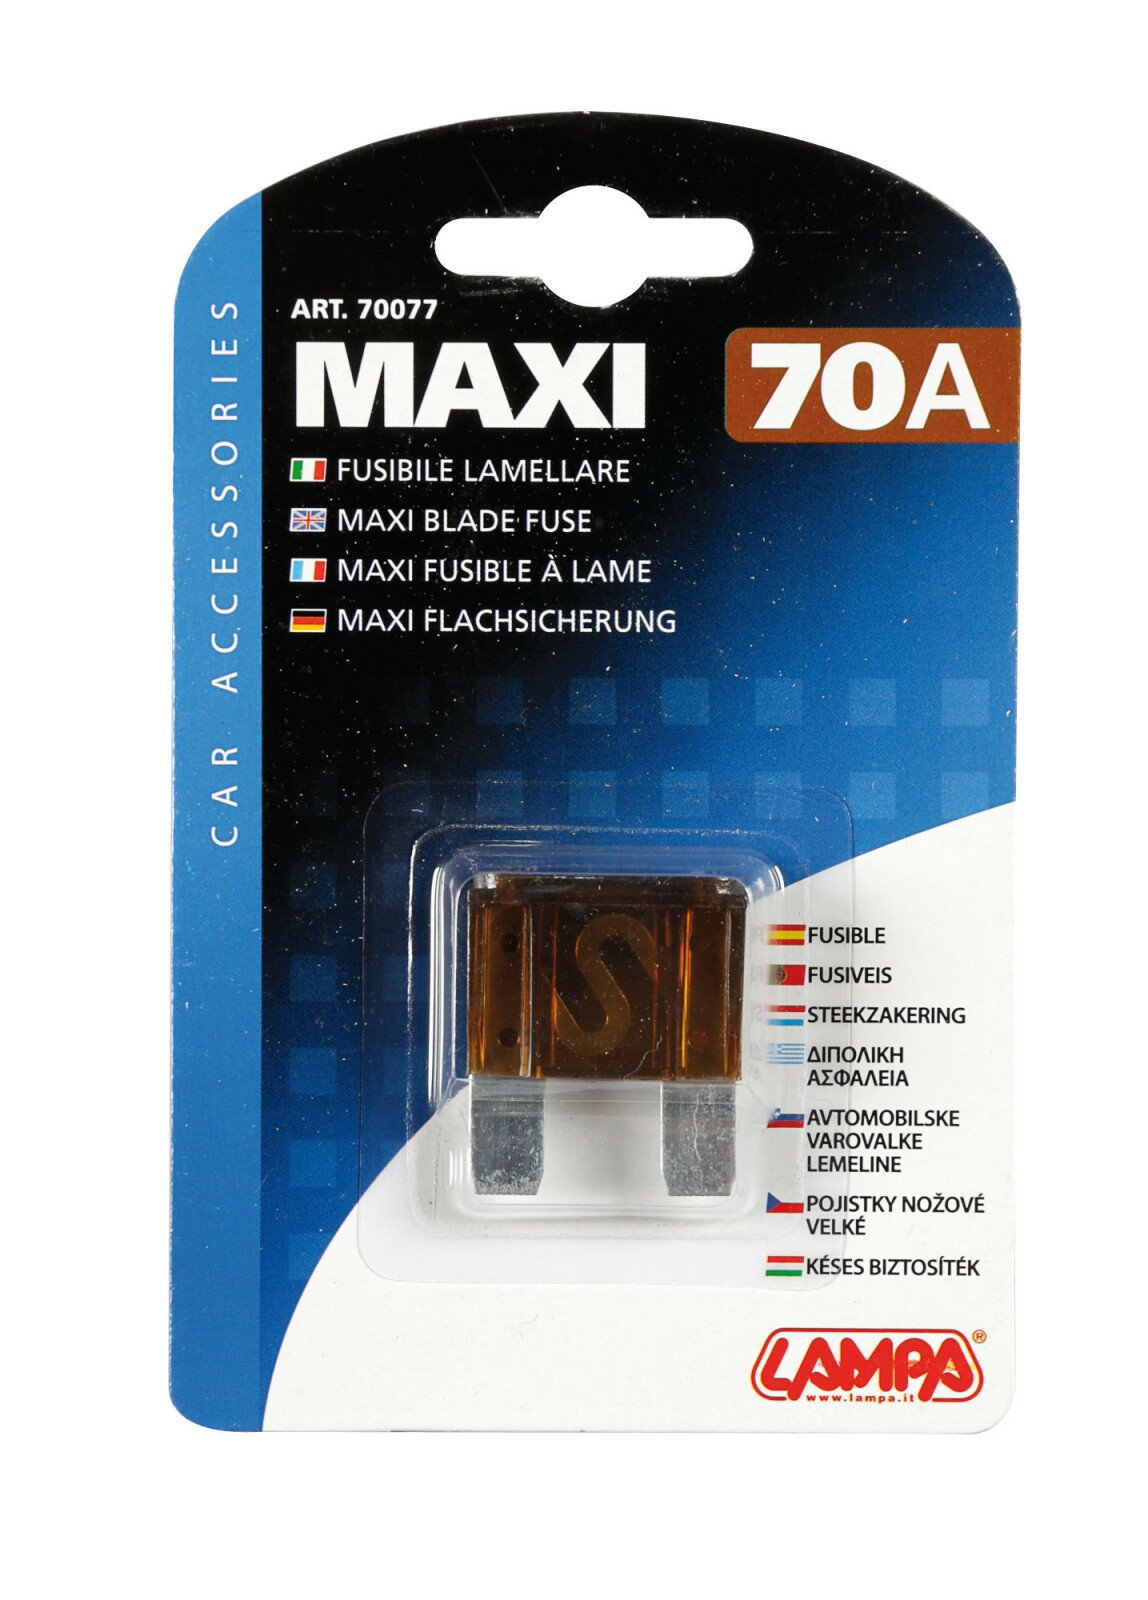 Maxi Blade fuse - 70A thumb